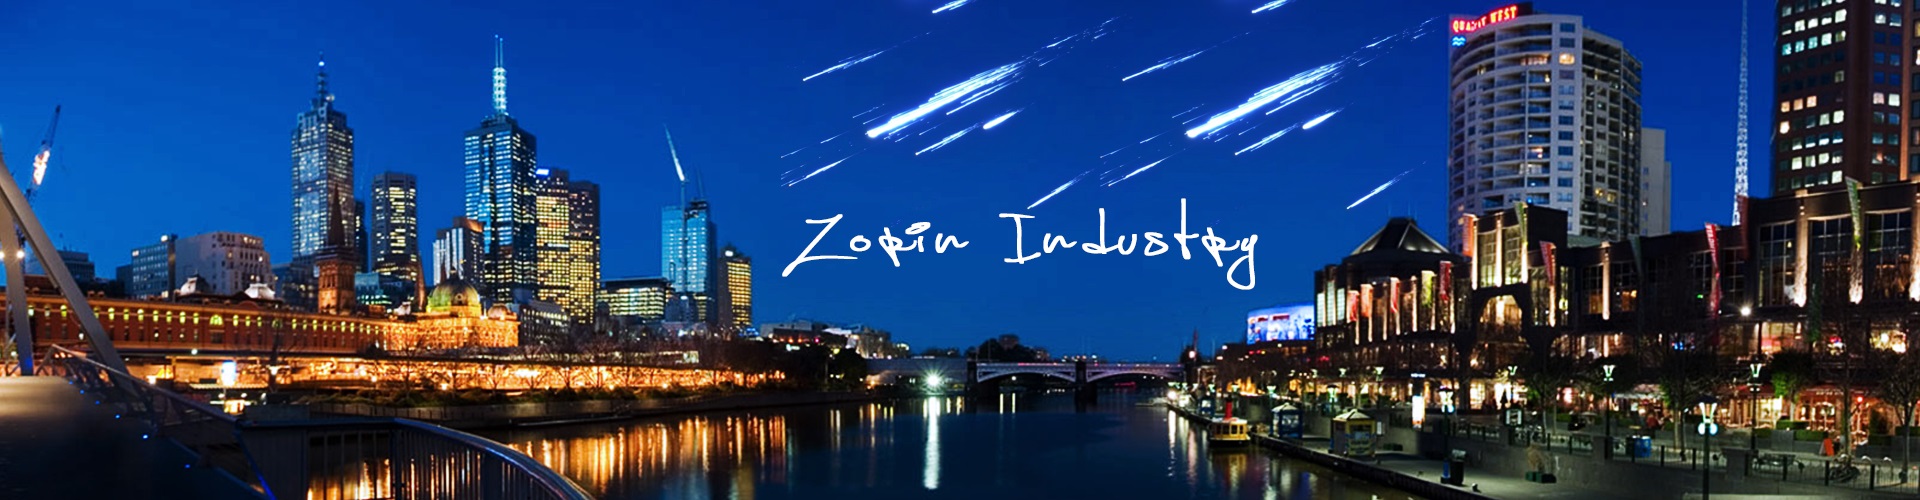 Zorin Industry